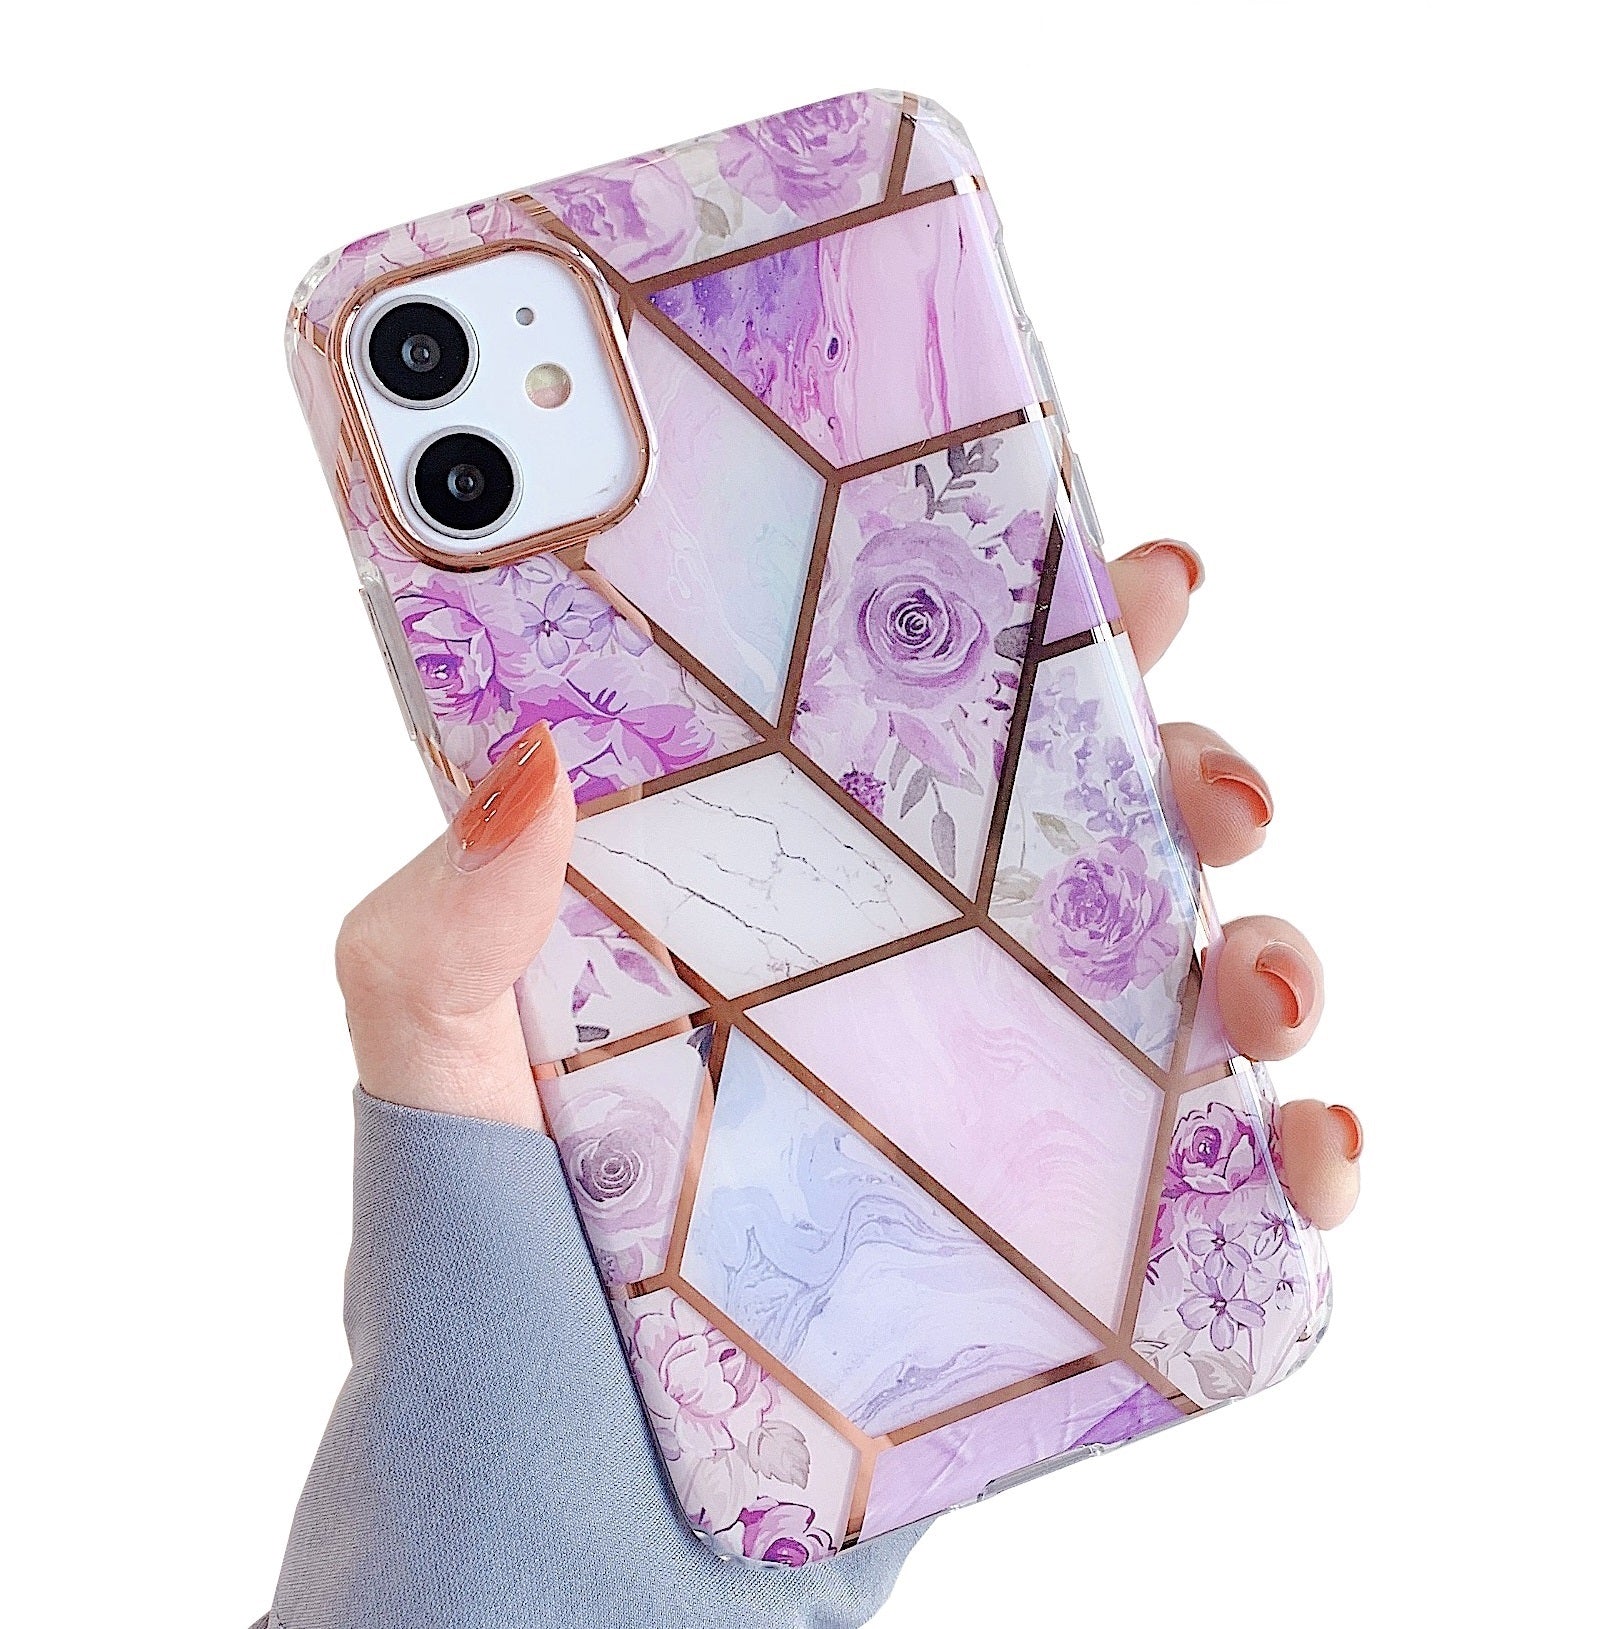 iPhone XR 11 12 pro max X XS pretty purple mvyno case cover